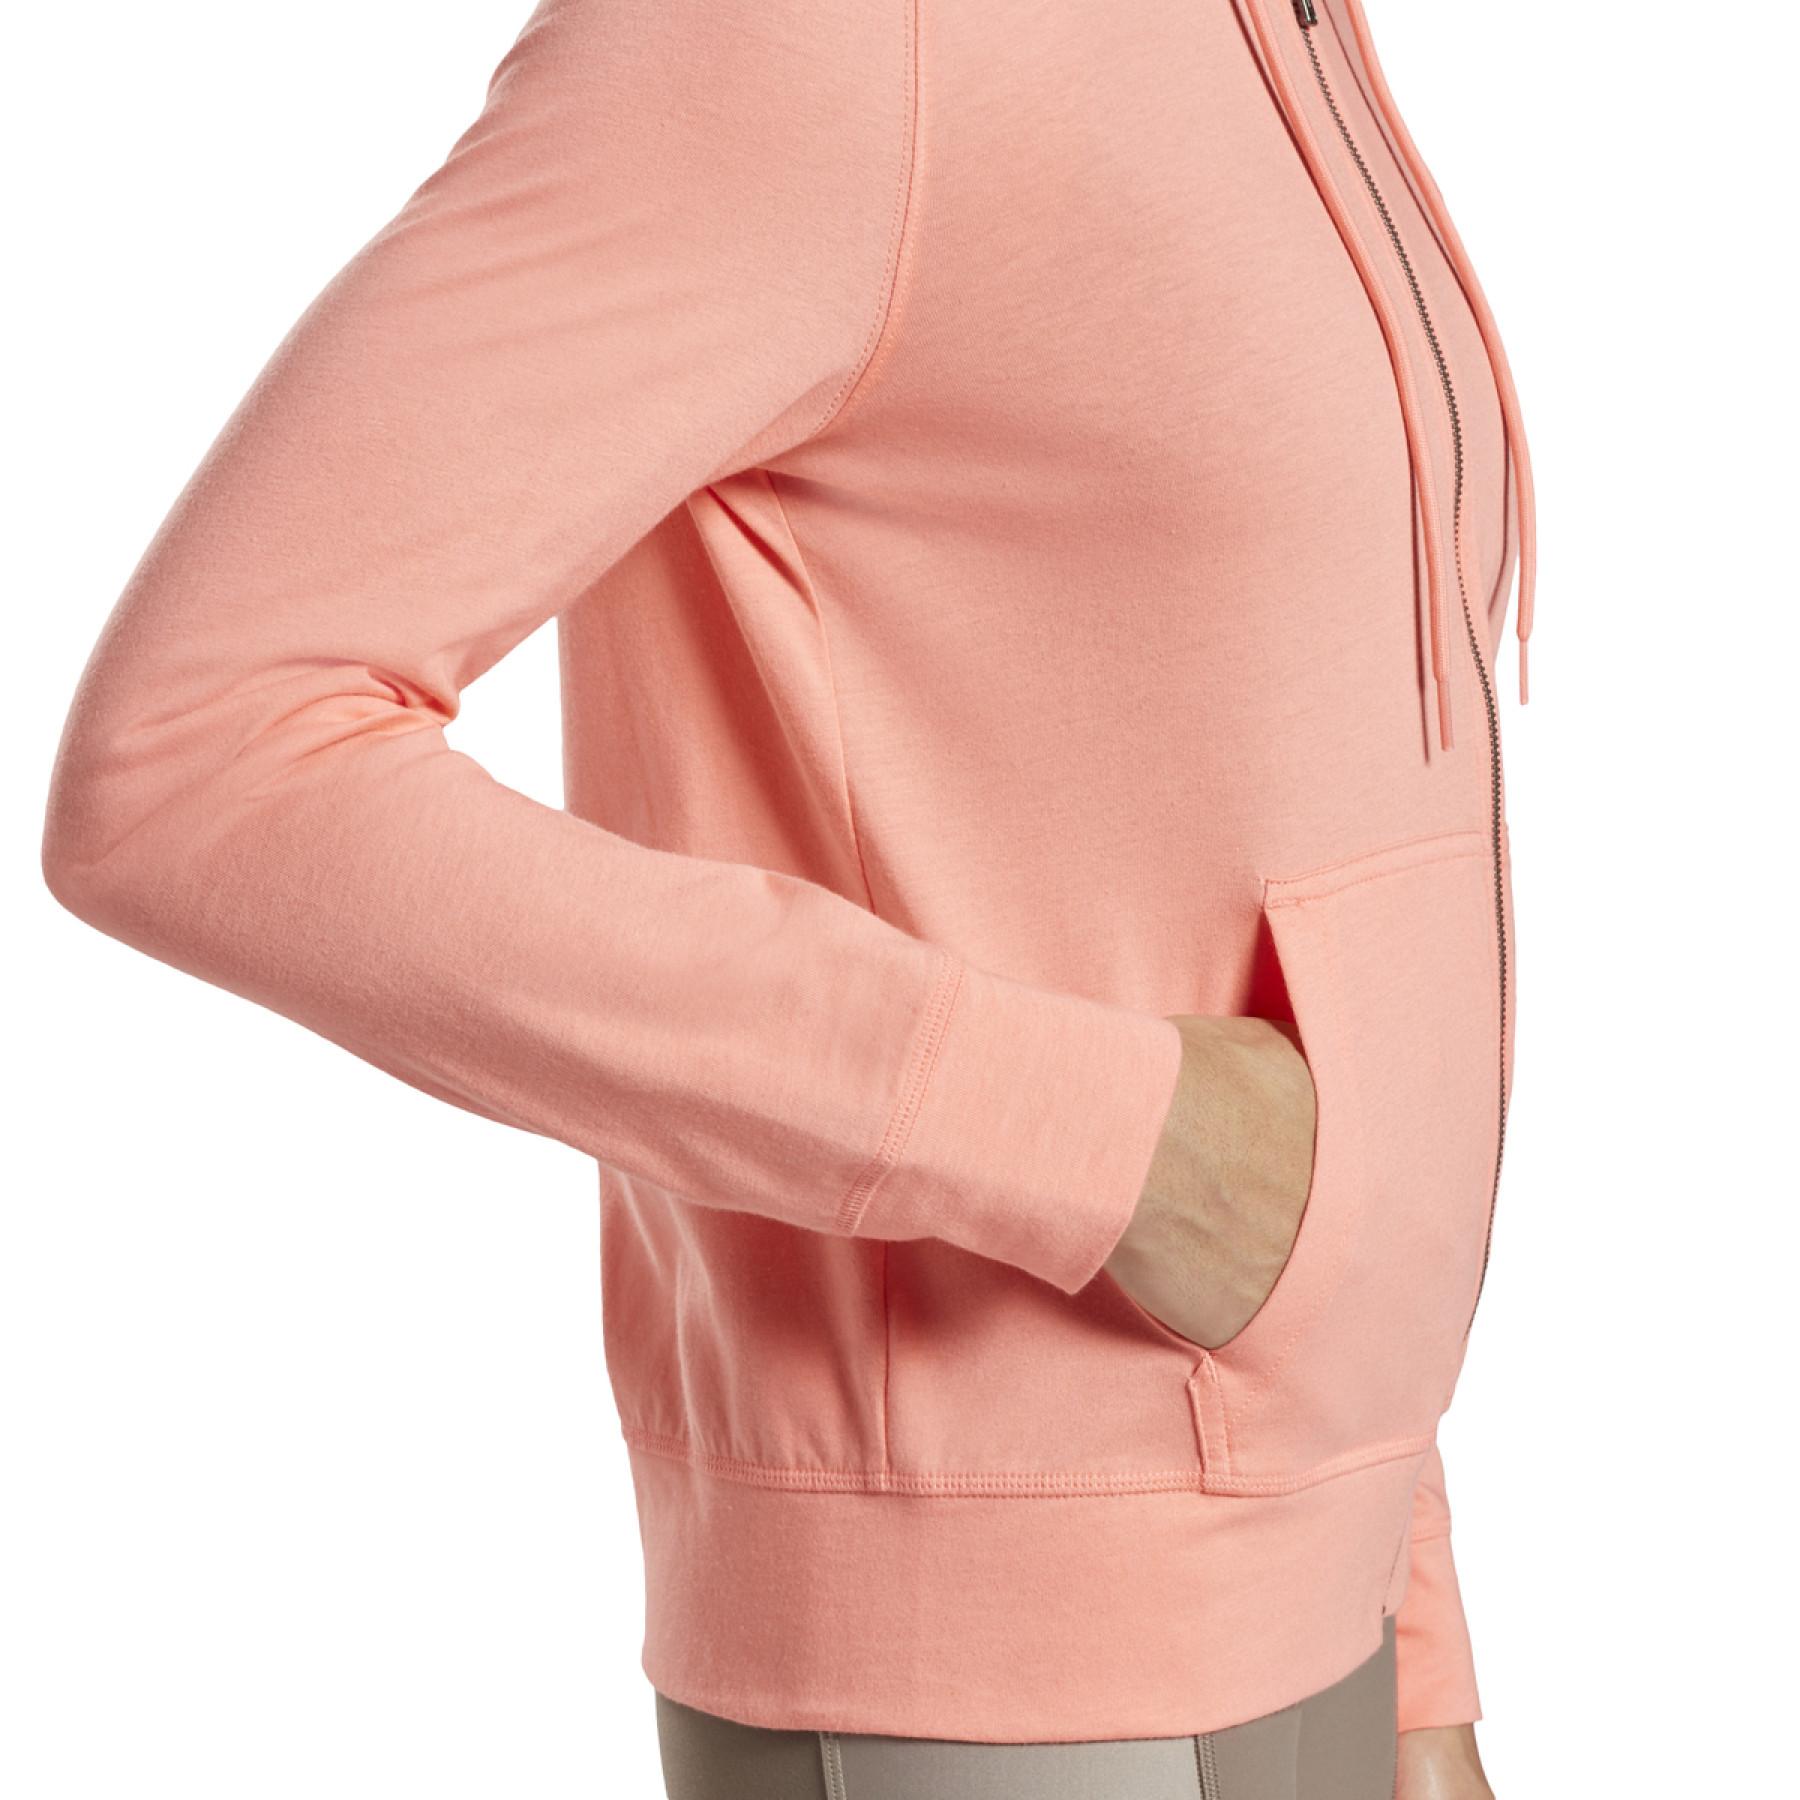 Women's zip-up sweatshirt Reebok Identity